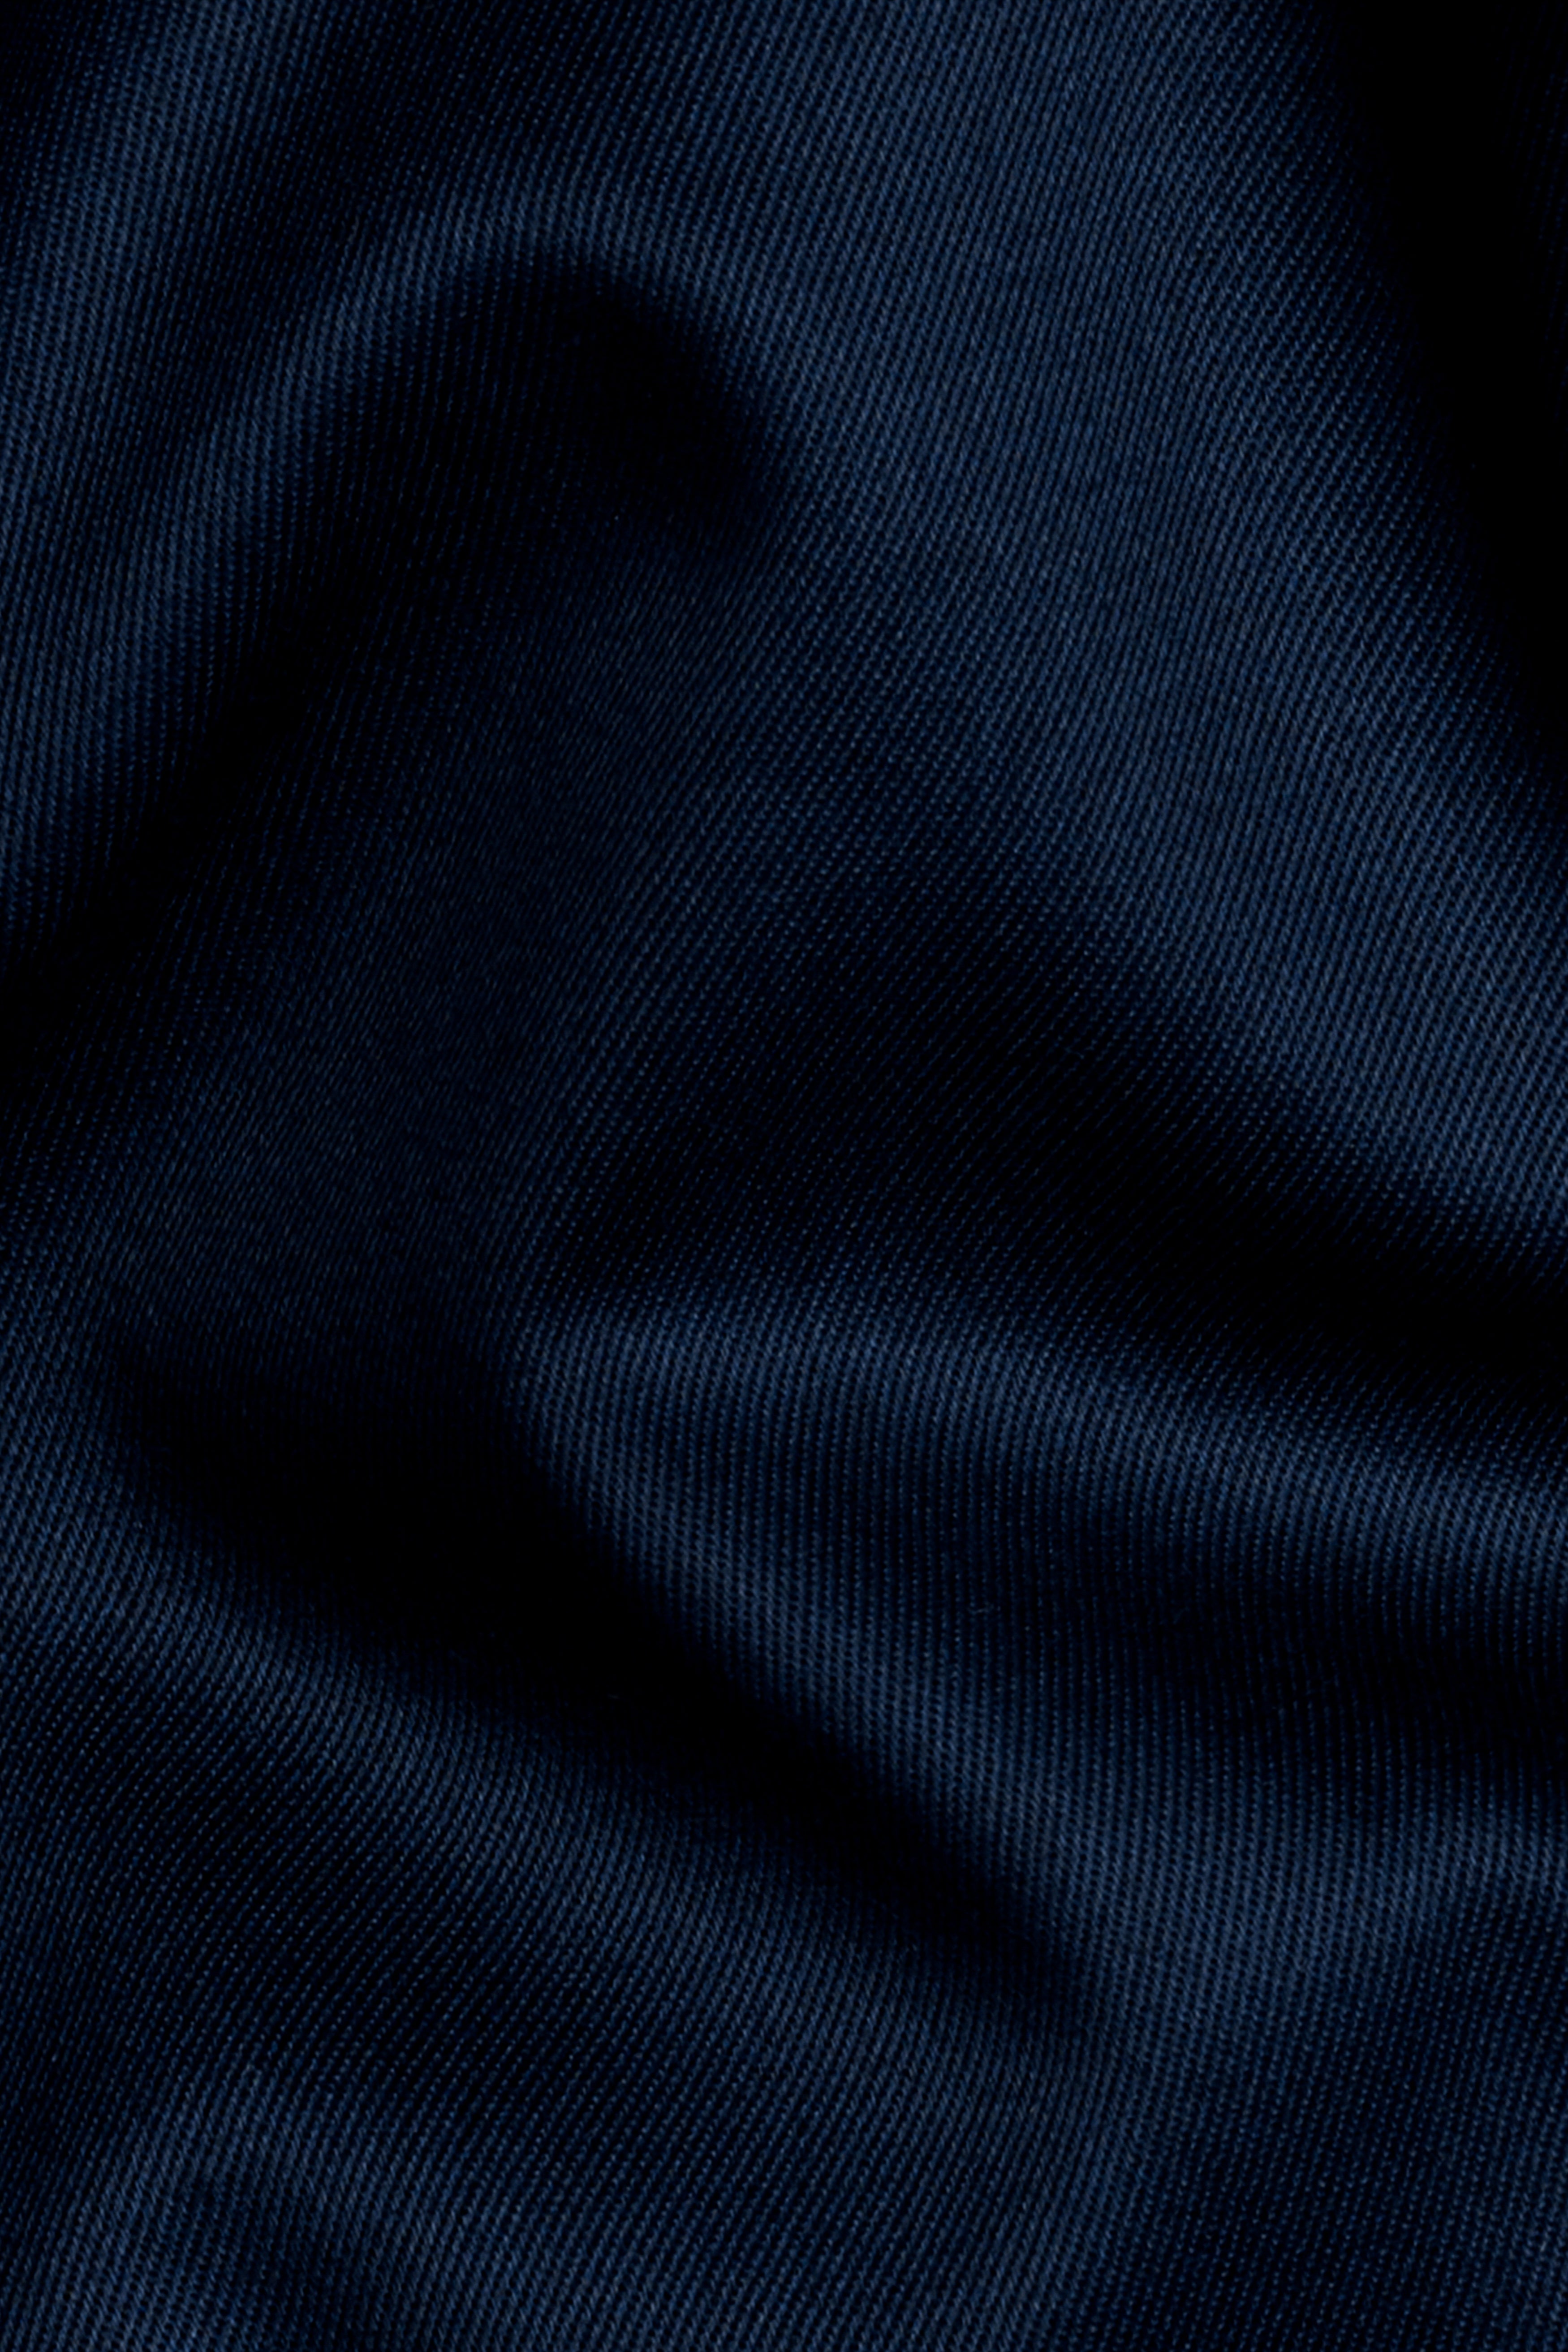 Delft Blue Premium Cotton Bandhgala Designer Suit ST2803-D82-36, ST2803-D82-38, ST2803-D82-40, ST2803-D82-42, ST2803-D82-44, ST2803-D82-46, ST2803-D82-48, ST2803-D82-50, ST2803-D82-52, ST2803-D82-54, ST2803-D82-56, ST2803-D82-58, ST2803-D82-60